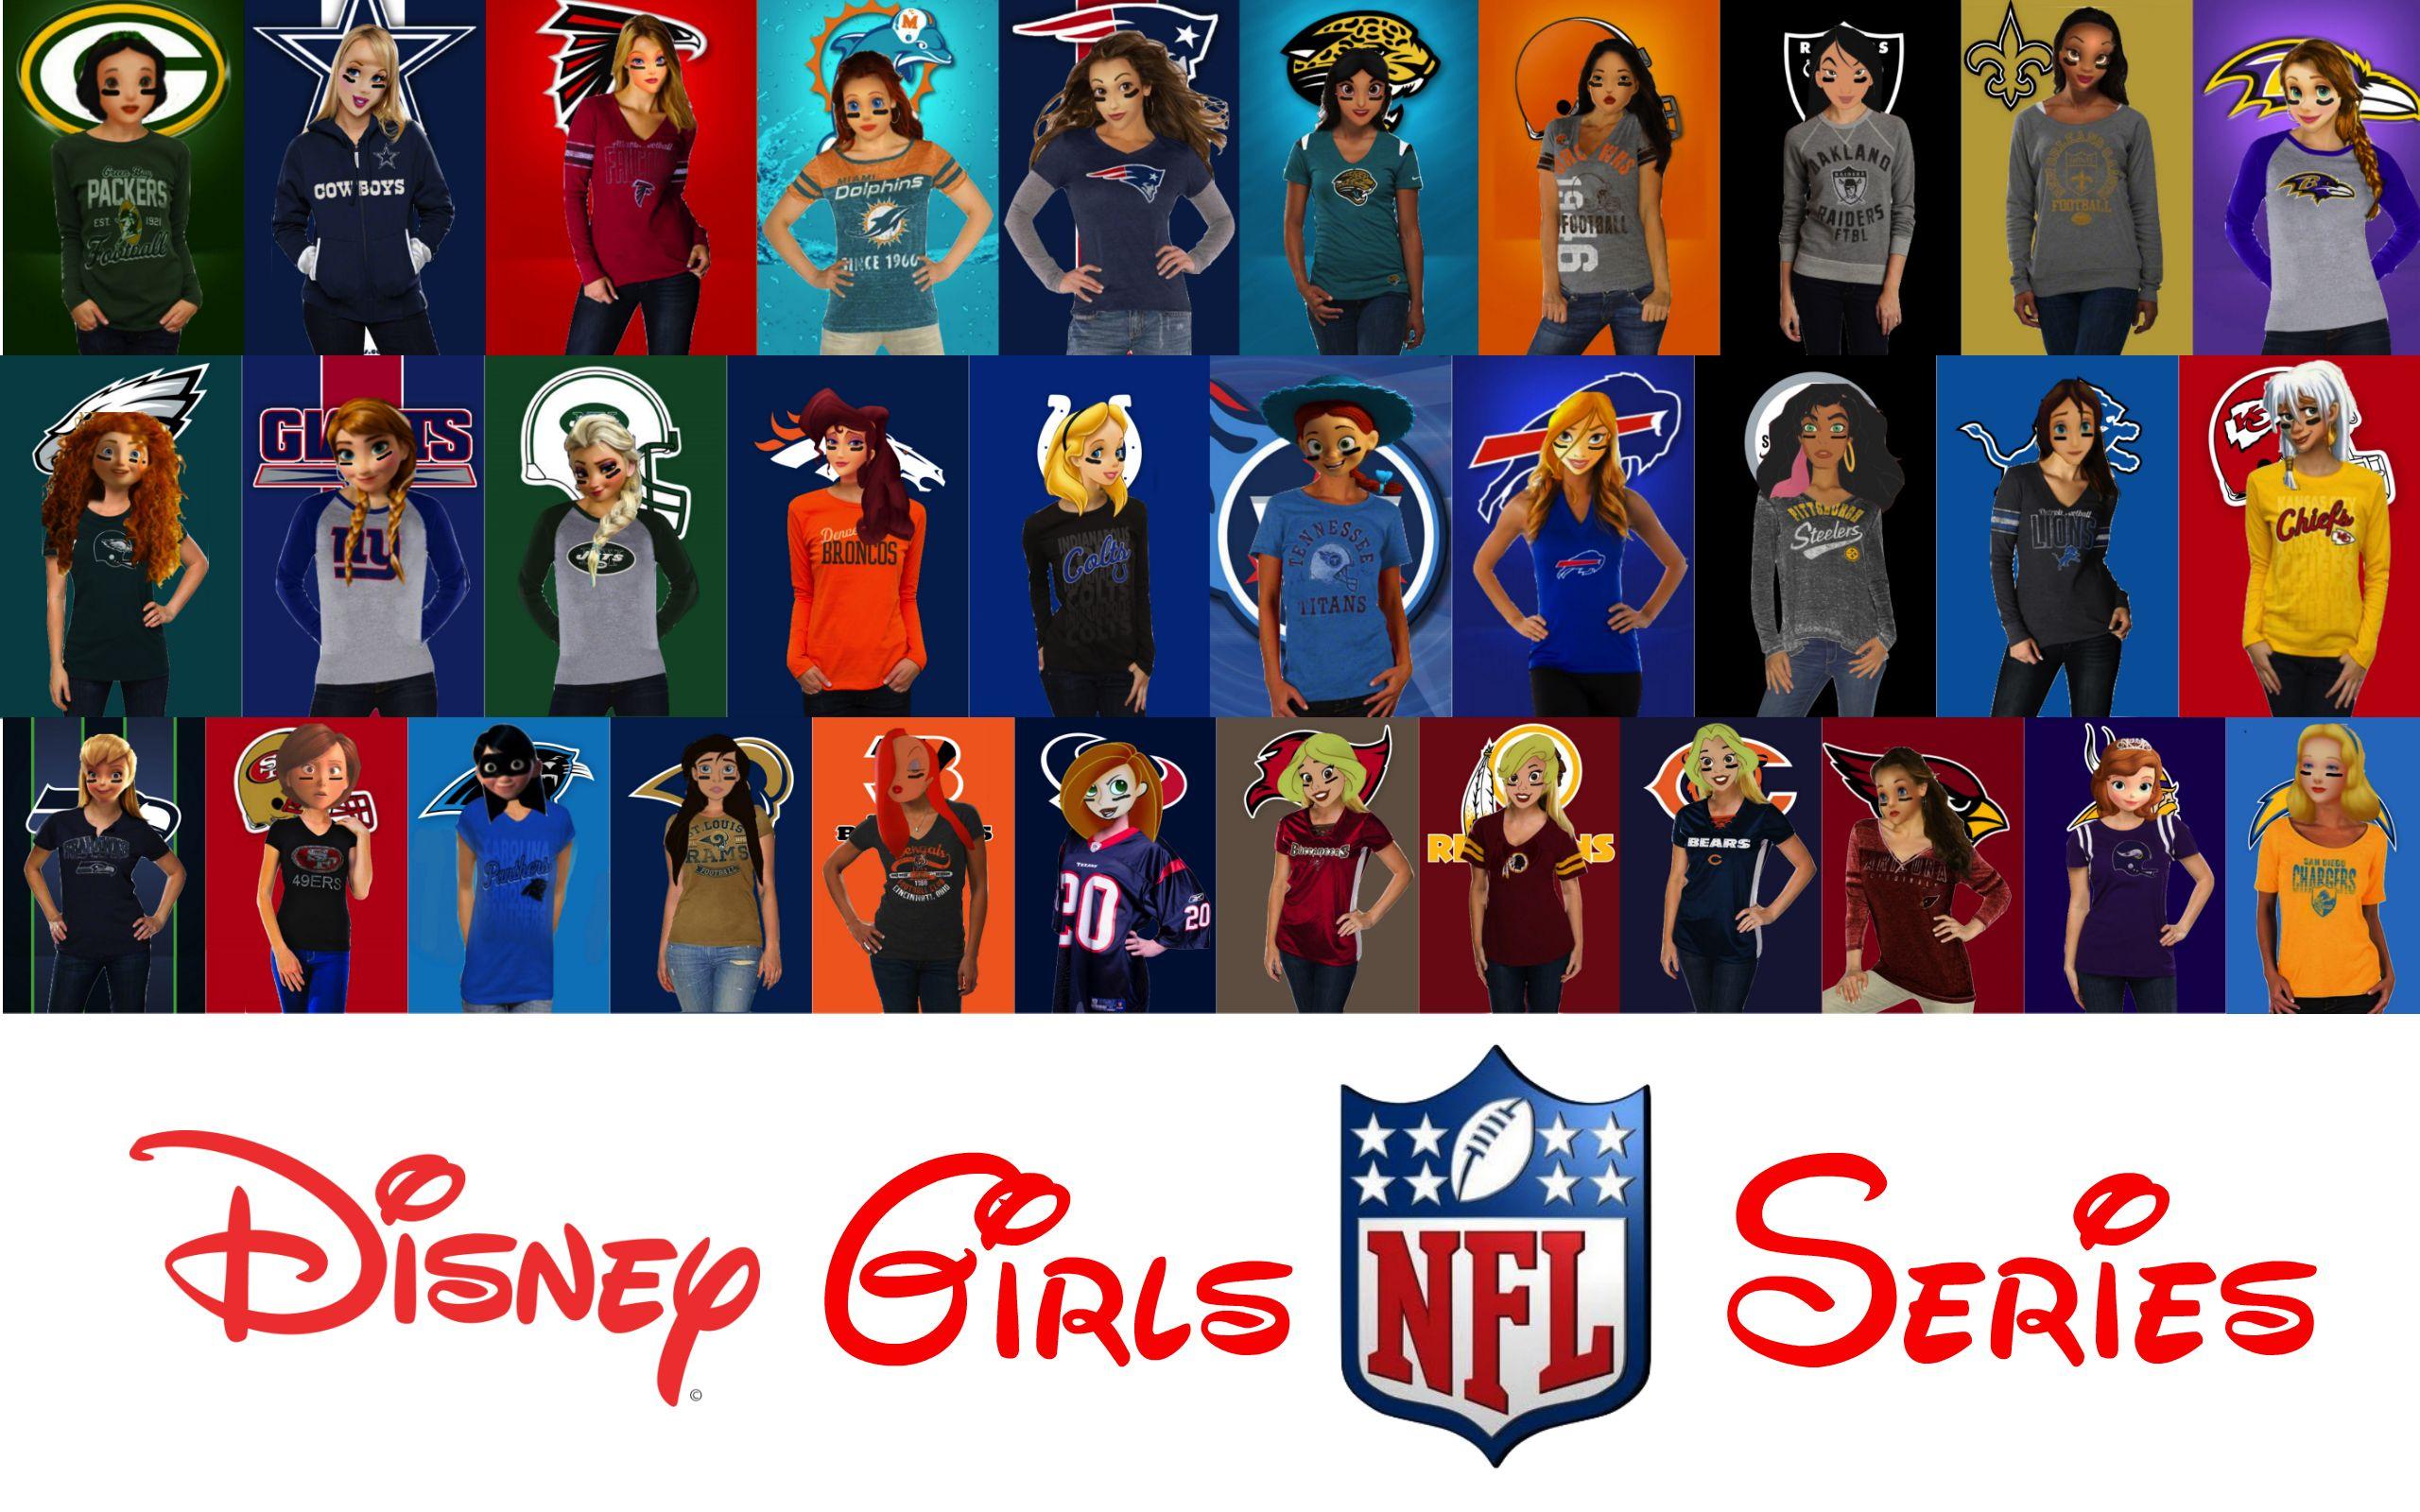 Disney Girls NFL Series Poster Wallpaper